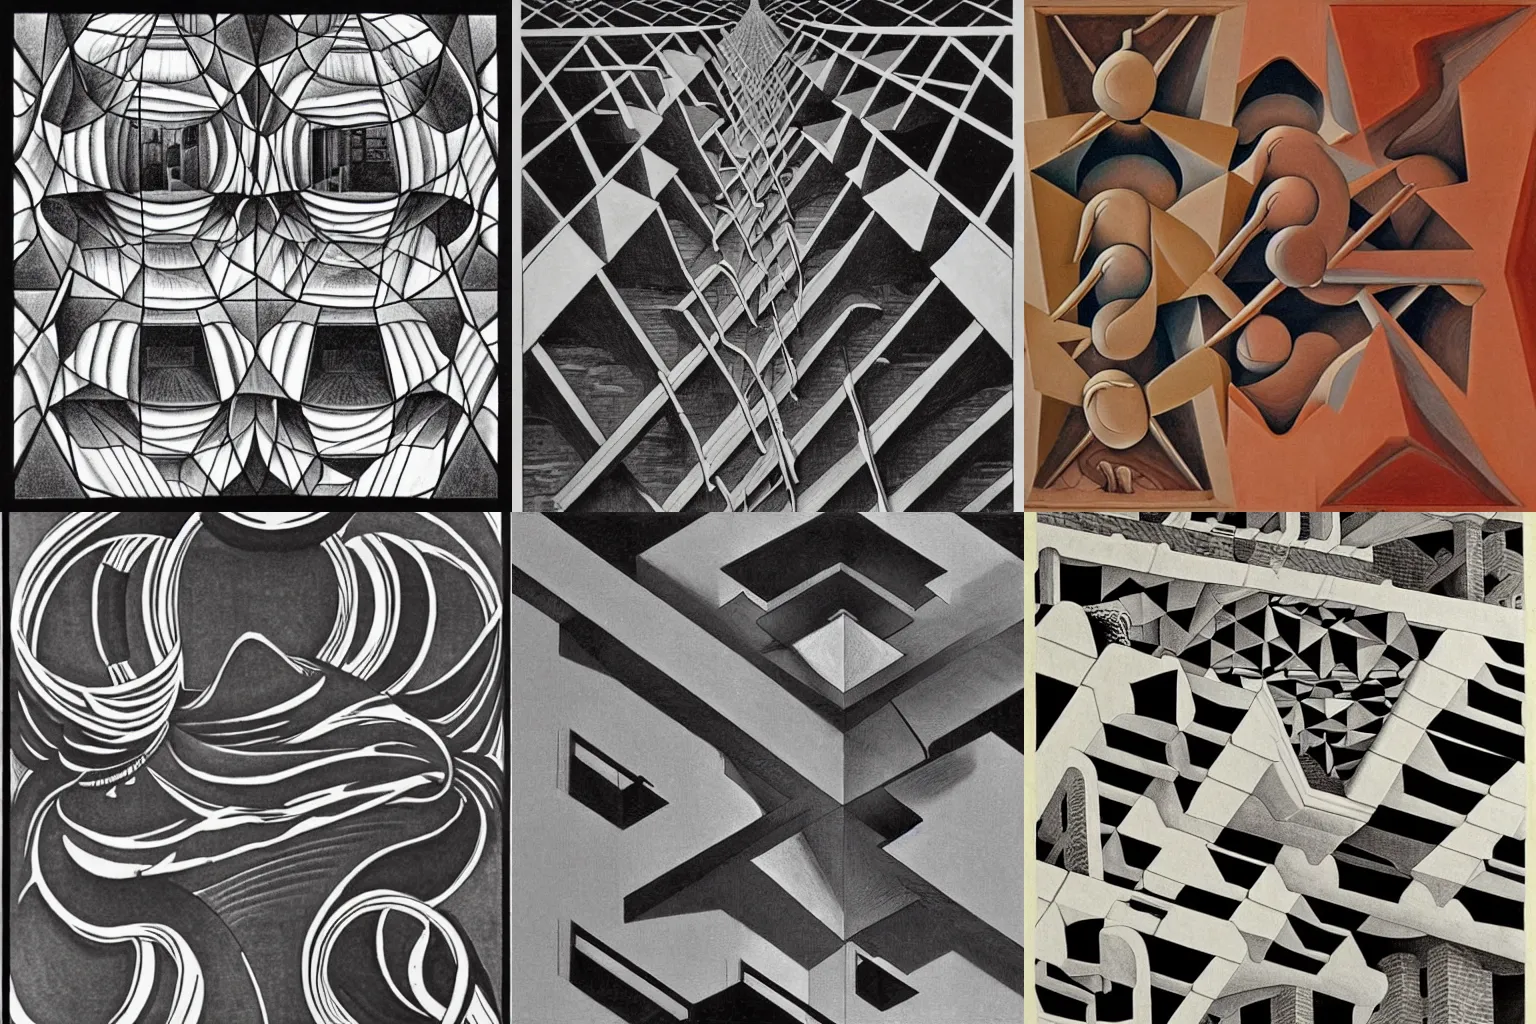 Prompt: Art by M.C. Escher